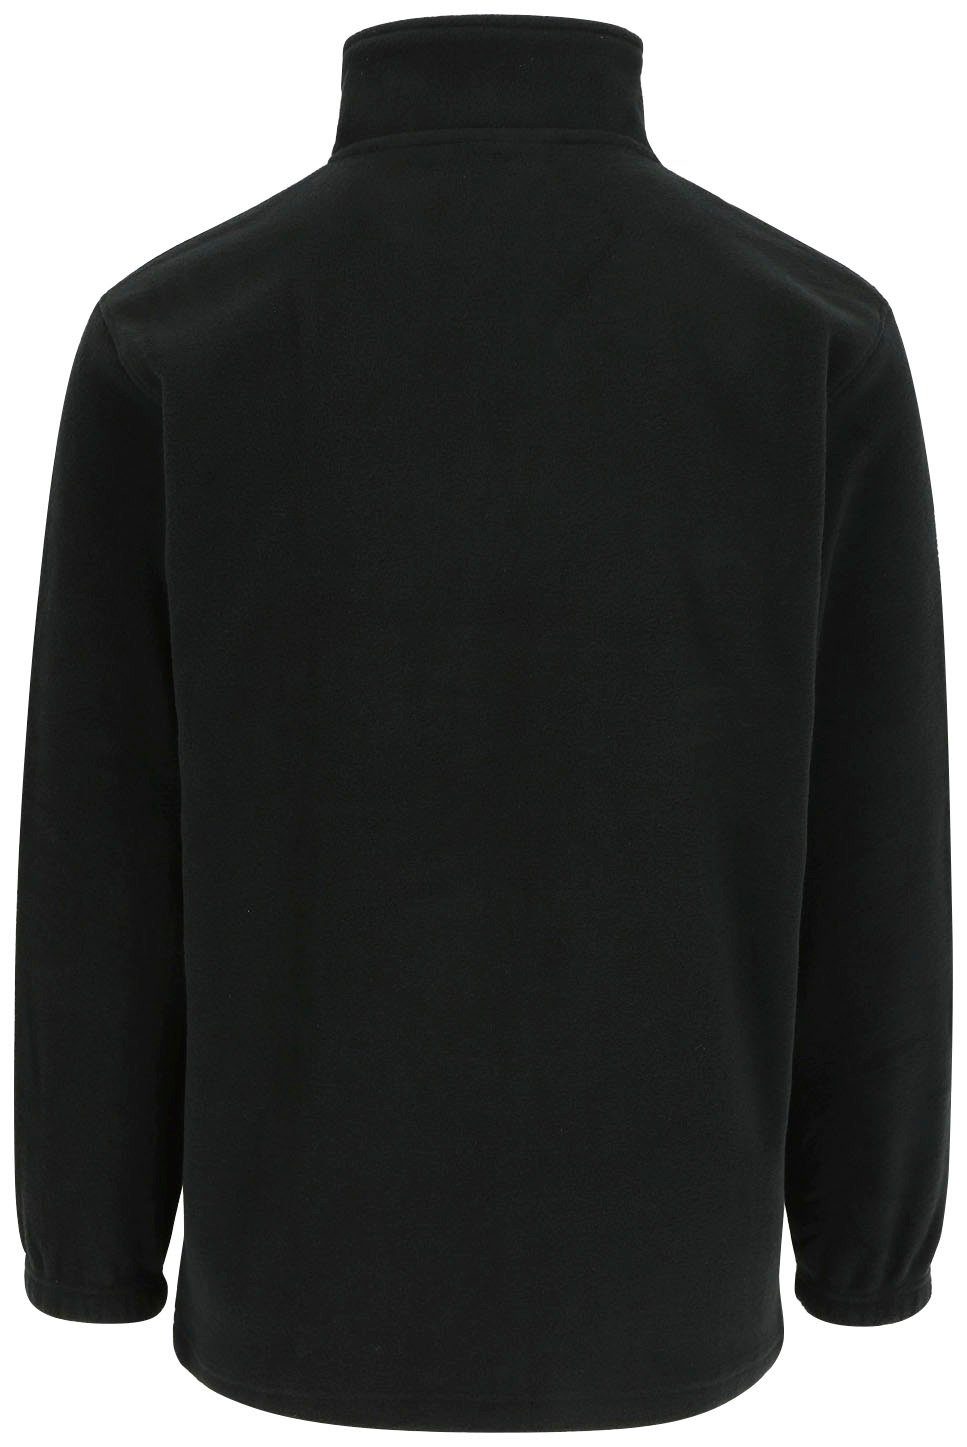 Herock Strickfleece-Pullover Antalis Fleece Sweater verschiedene Tragegefühl, Kurzer Reißverschluss, Farben angenehmes